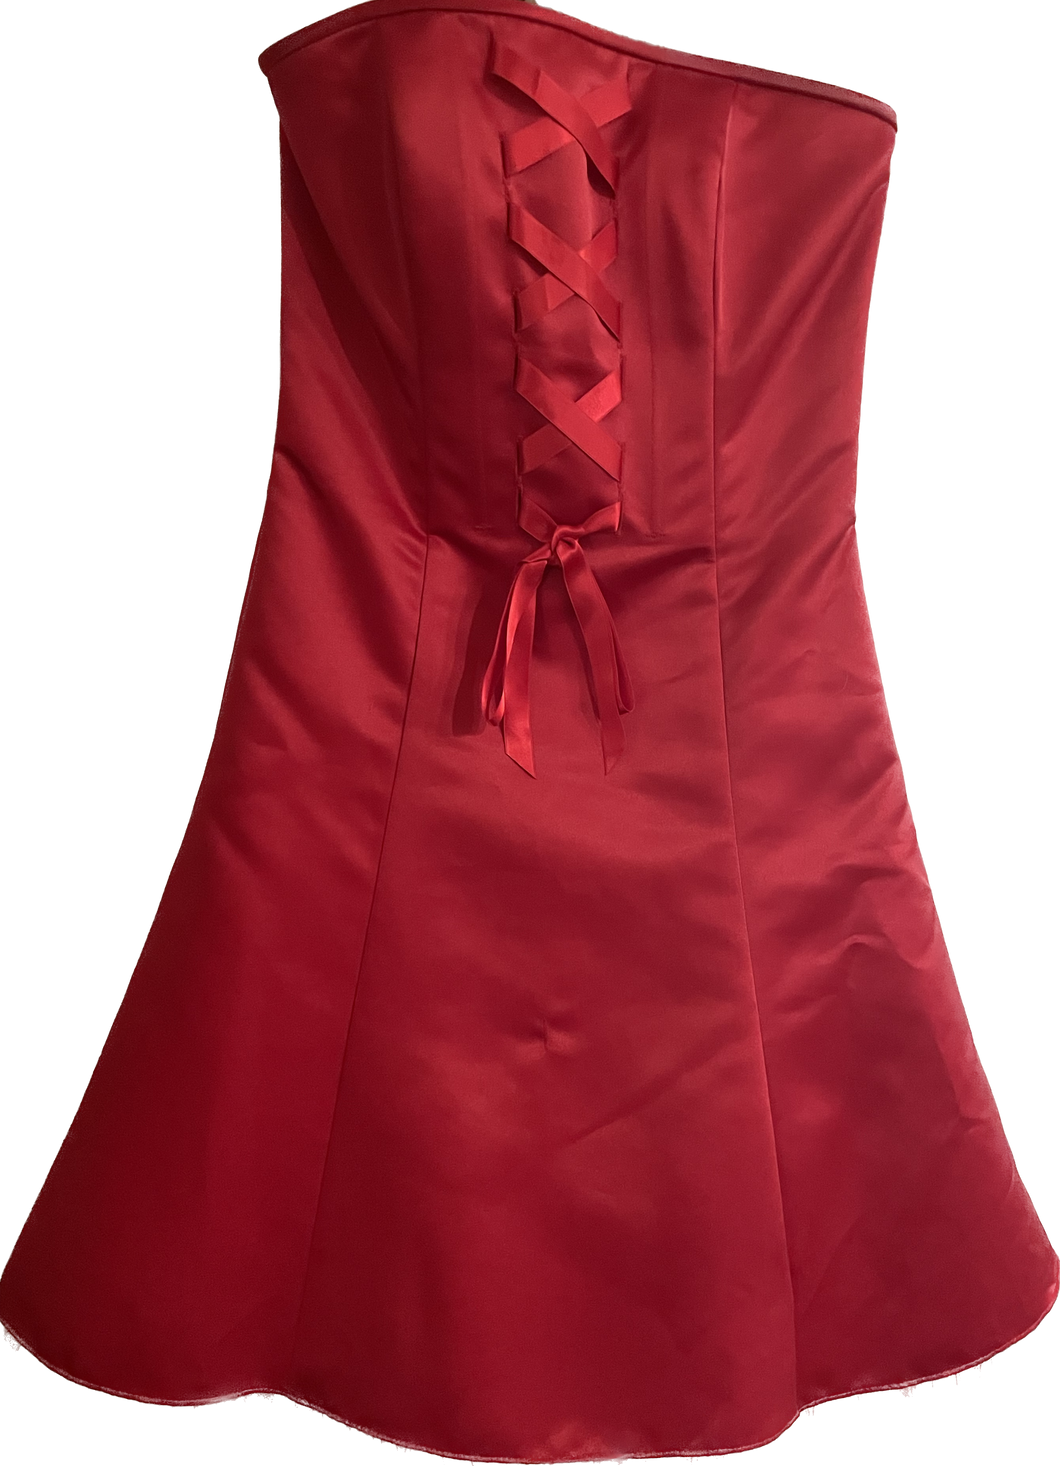 Jessica McClintock for Gunne Sax red strapless corset mini dress